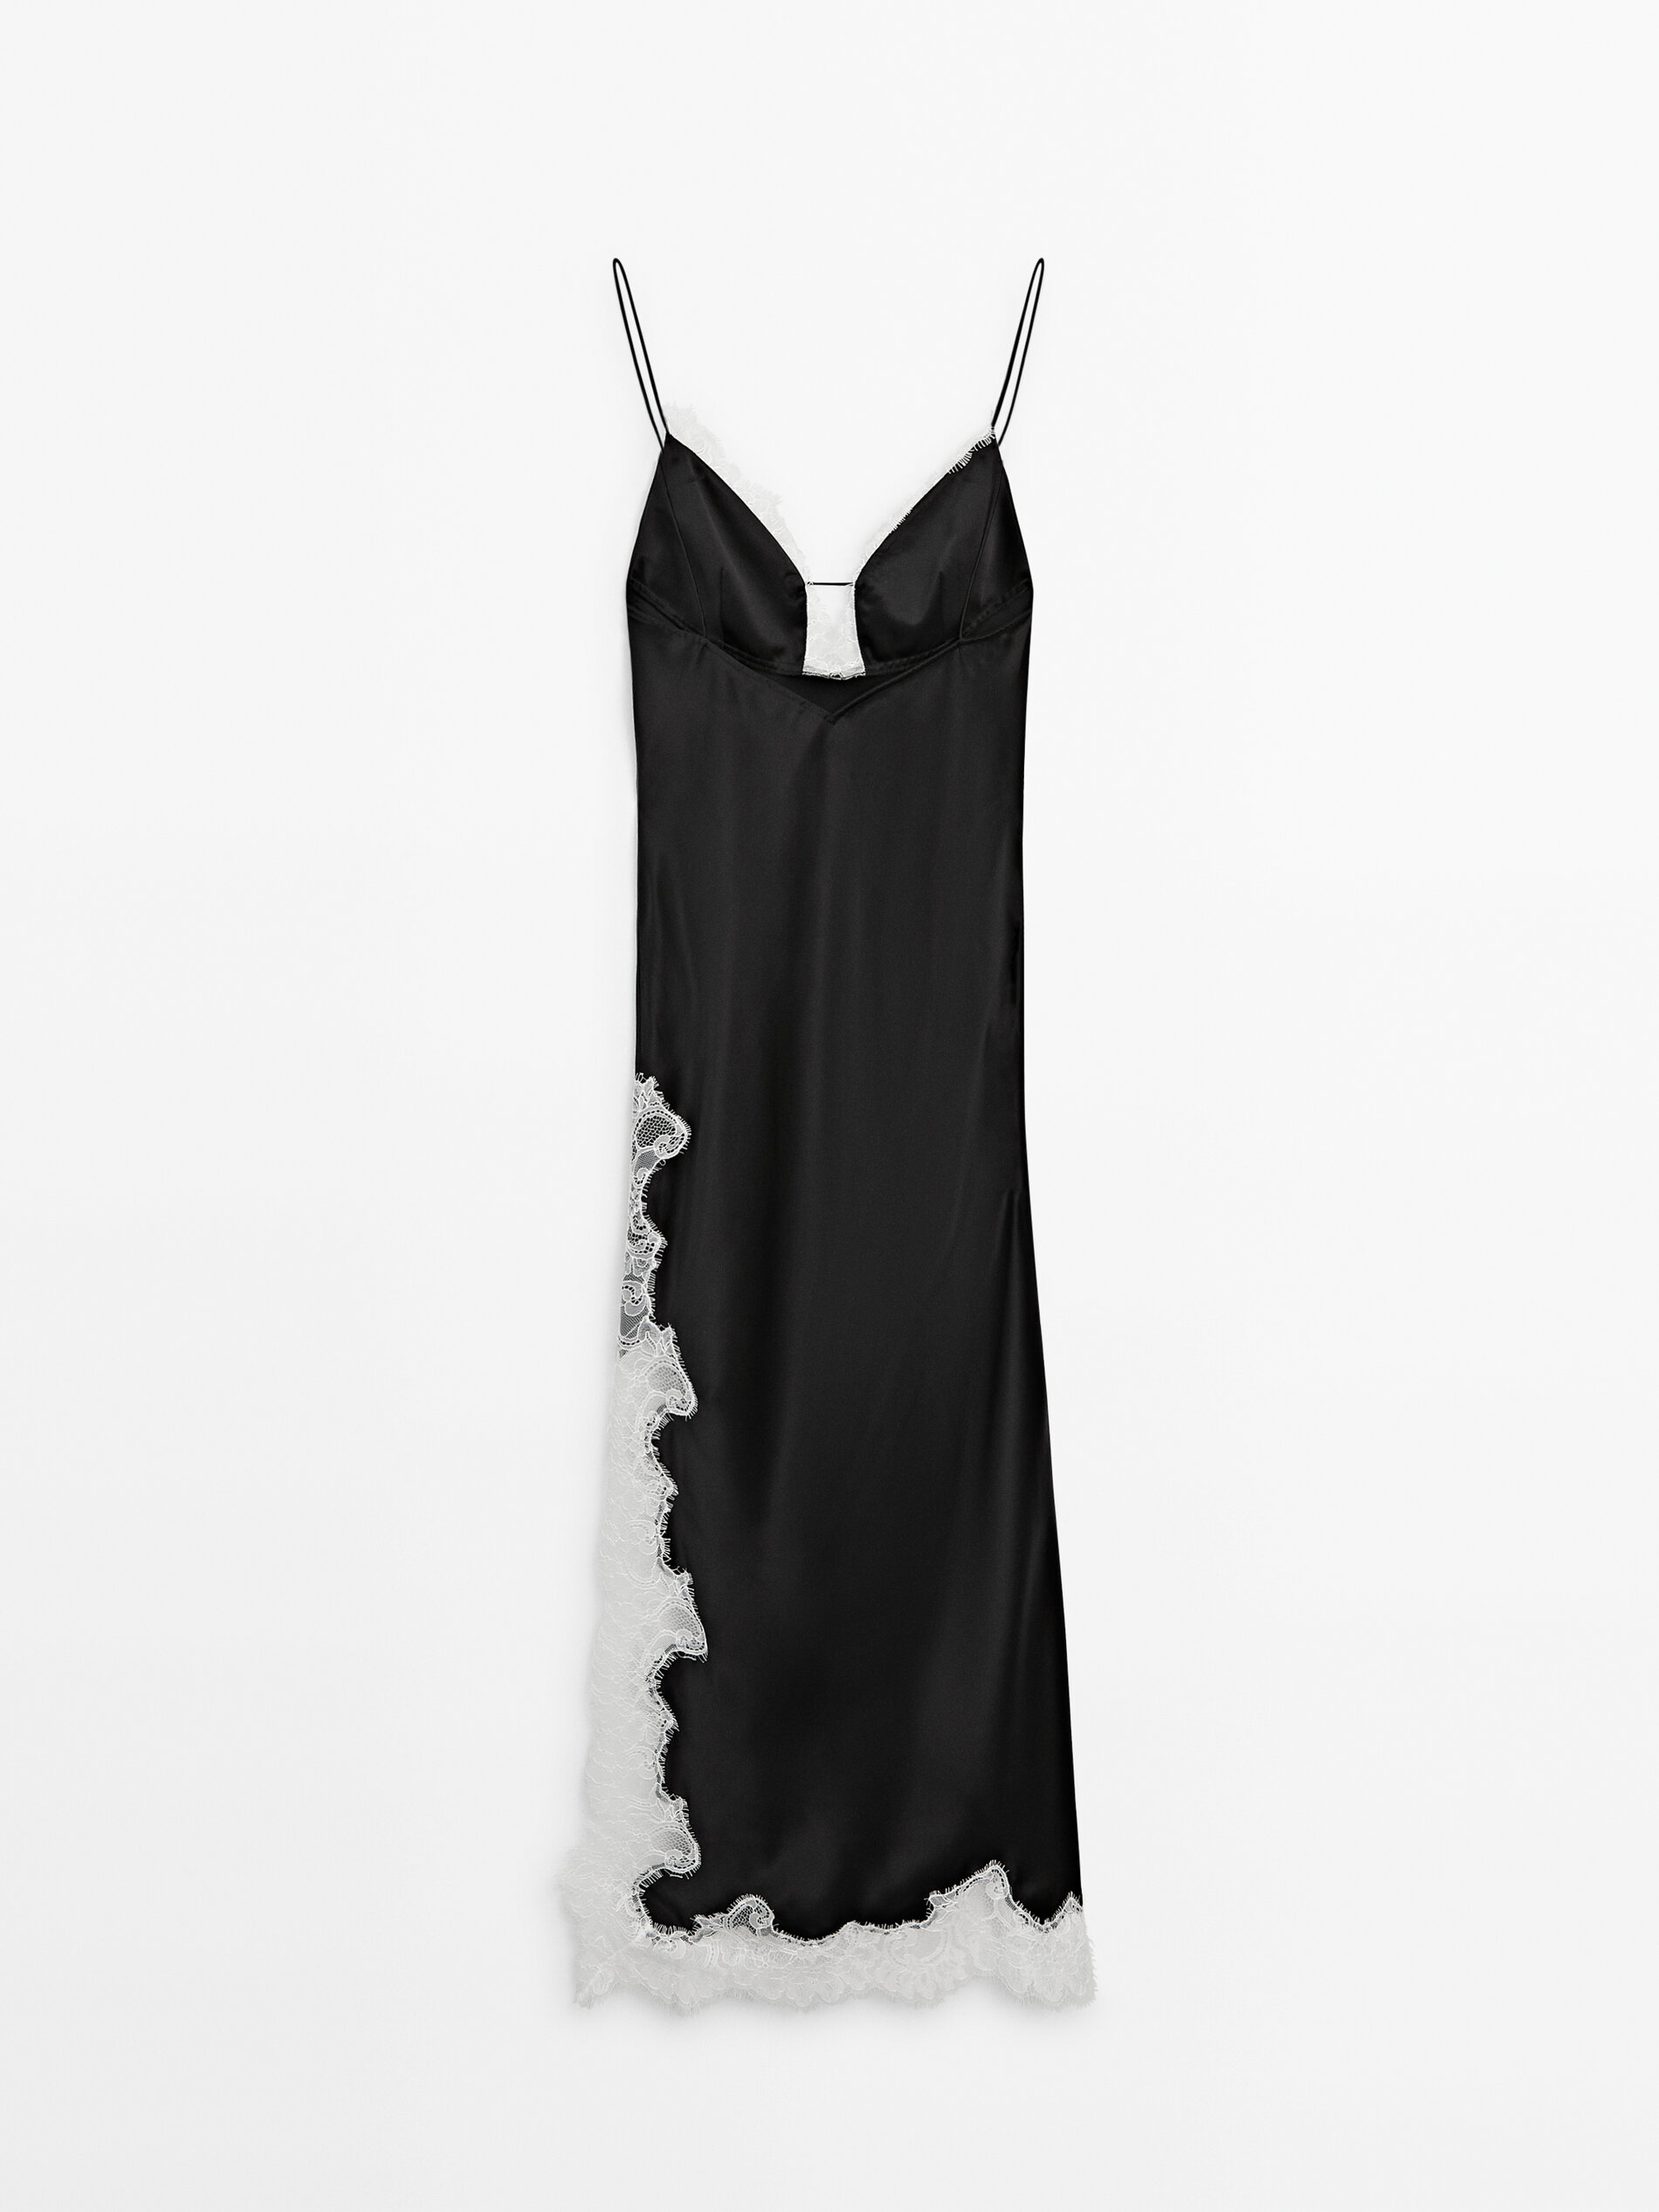 Satin camisole dress with contrast lace - Studio · Black · Smart